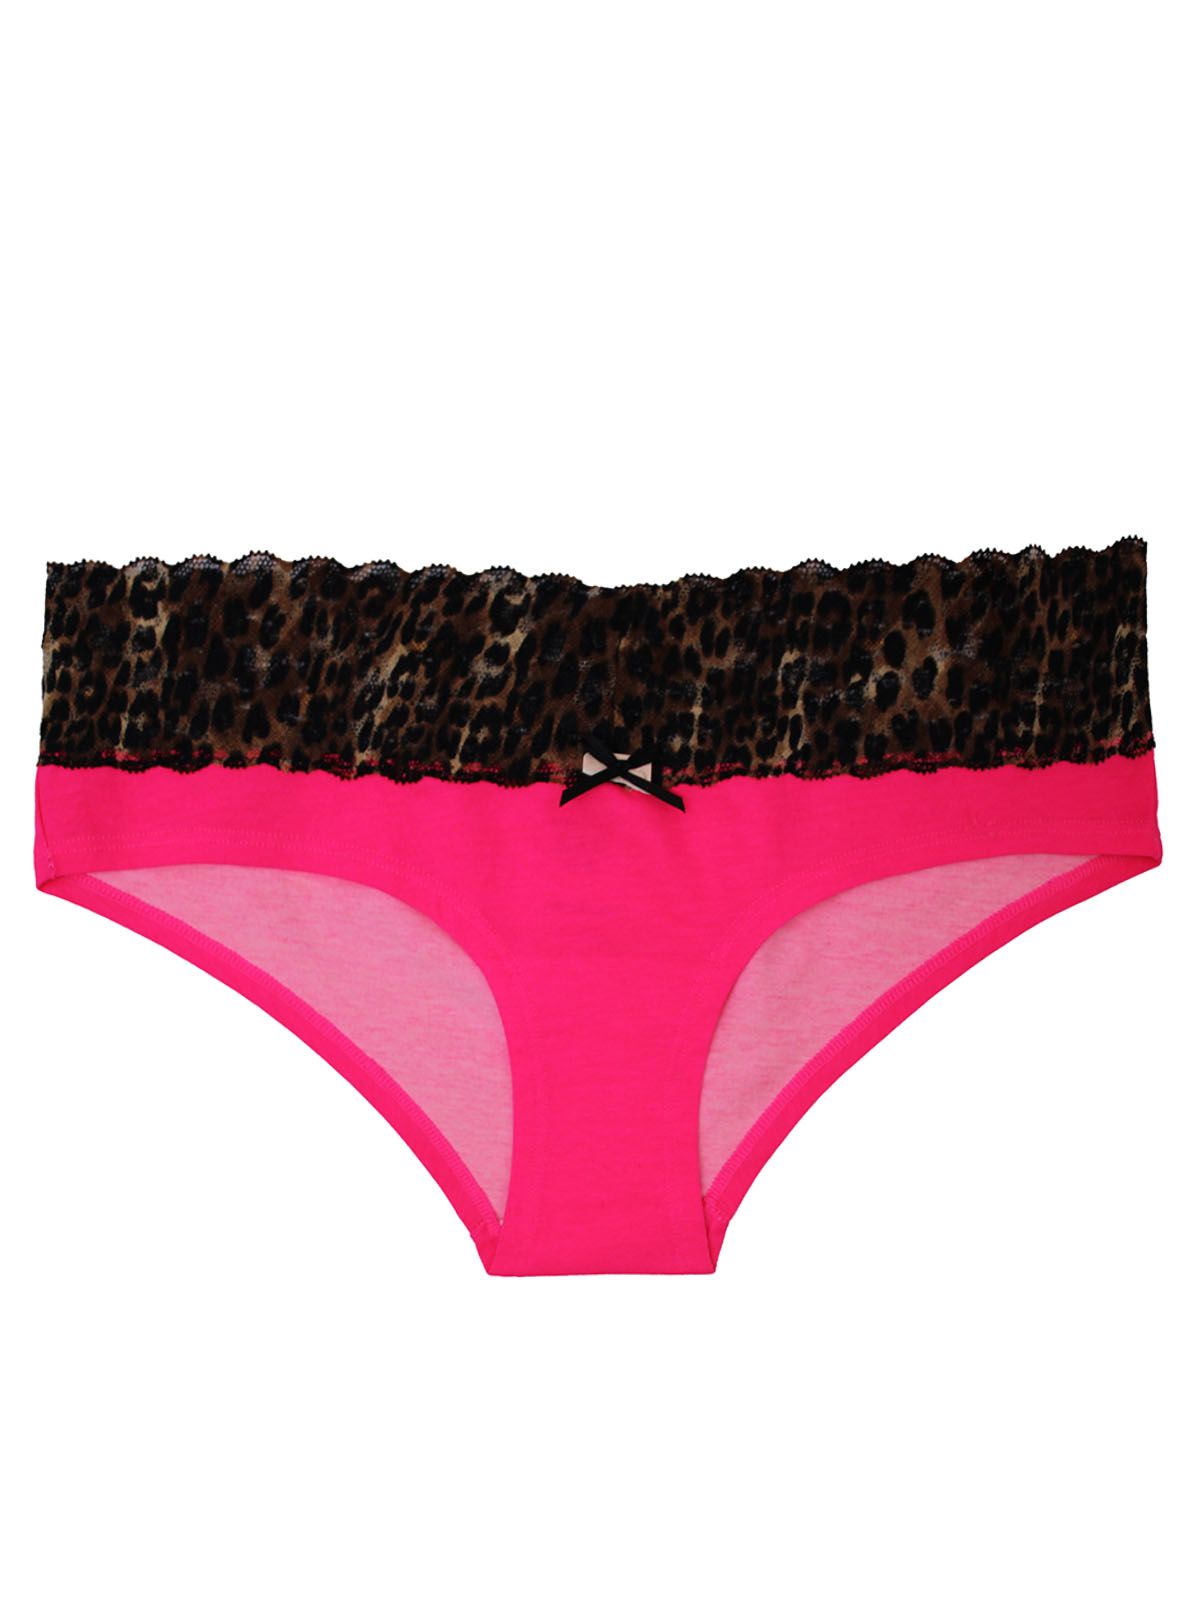 Buy Seamless Brazilian Panty - Order Brazilian online 5000009633 - PINK US